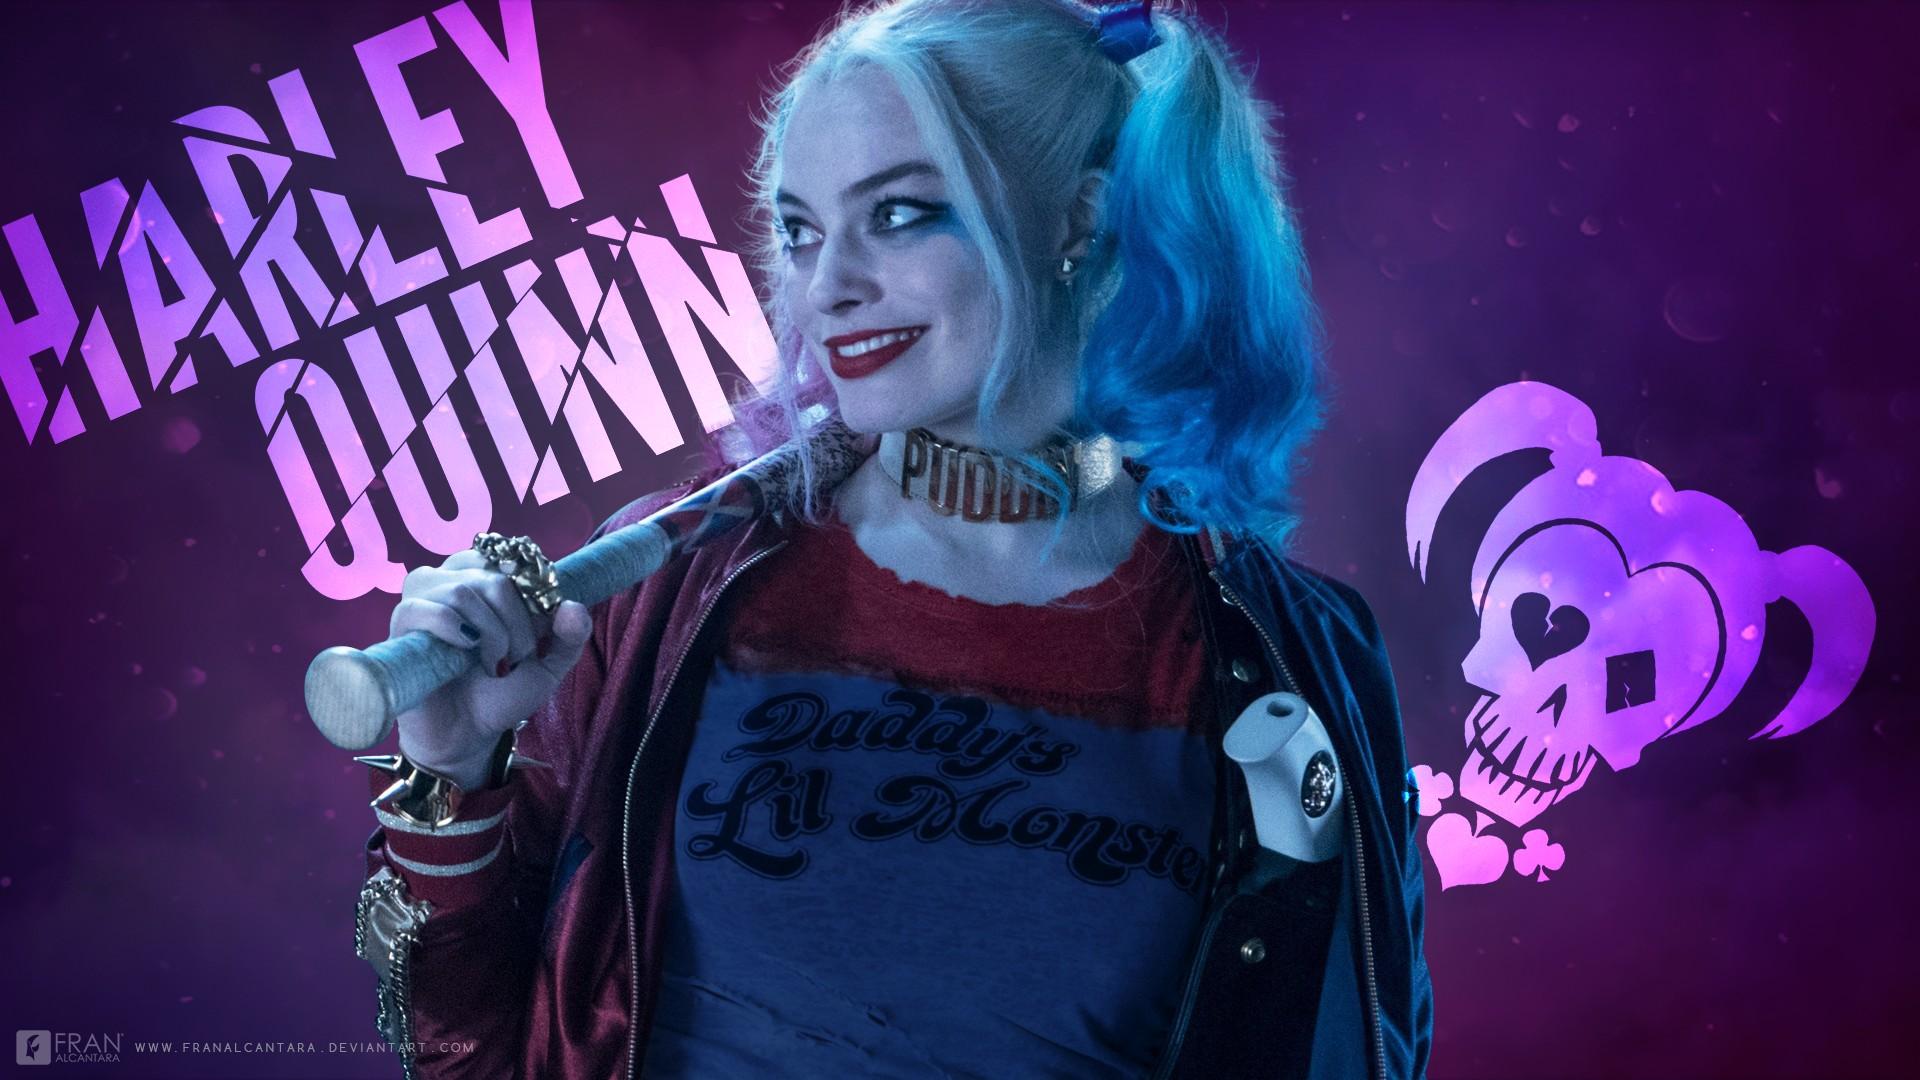 Wallpaper Picture Of Harley Quinn Desktop Cute